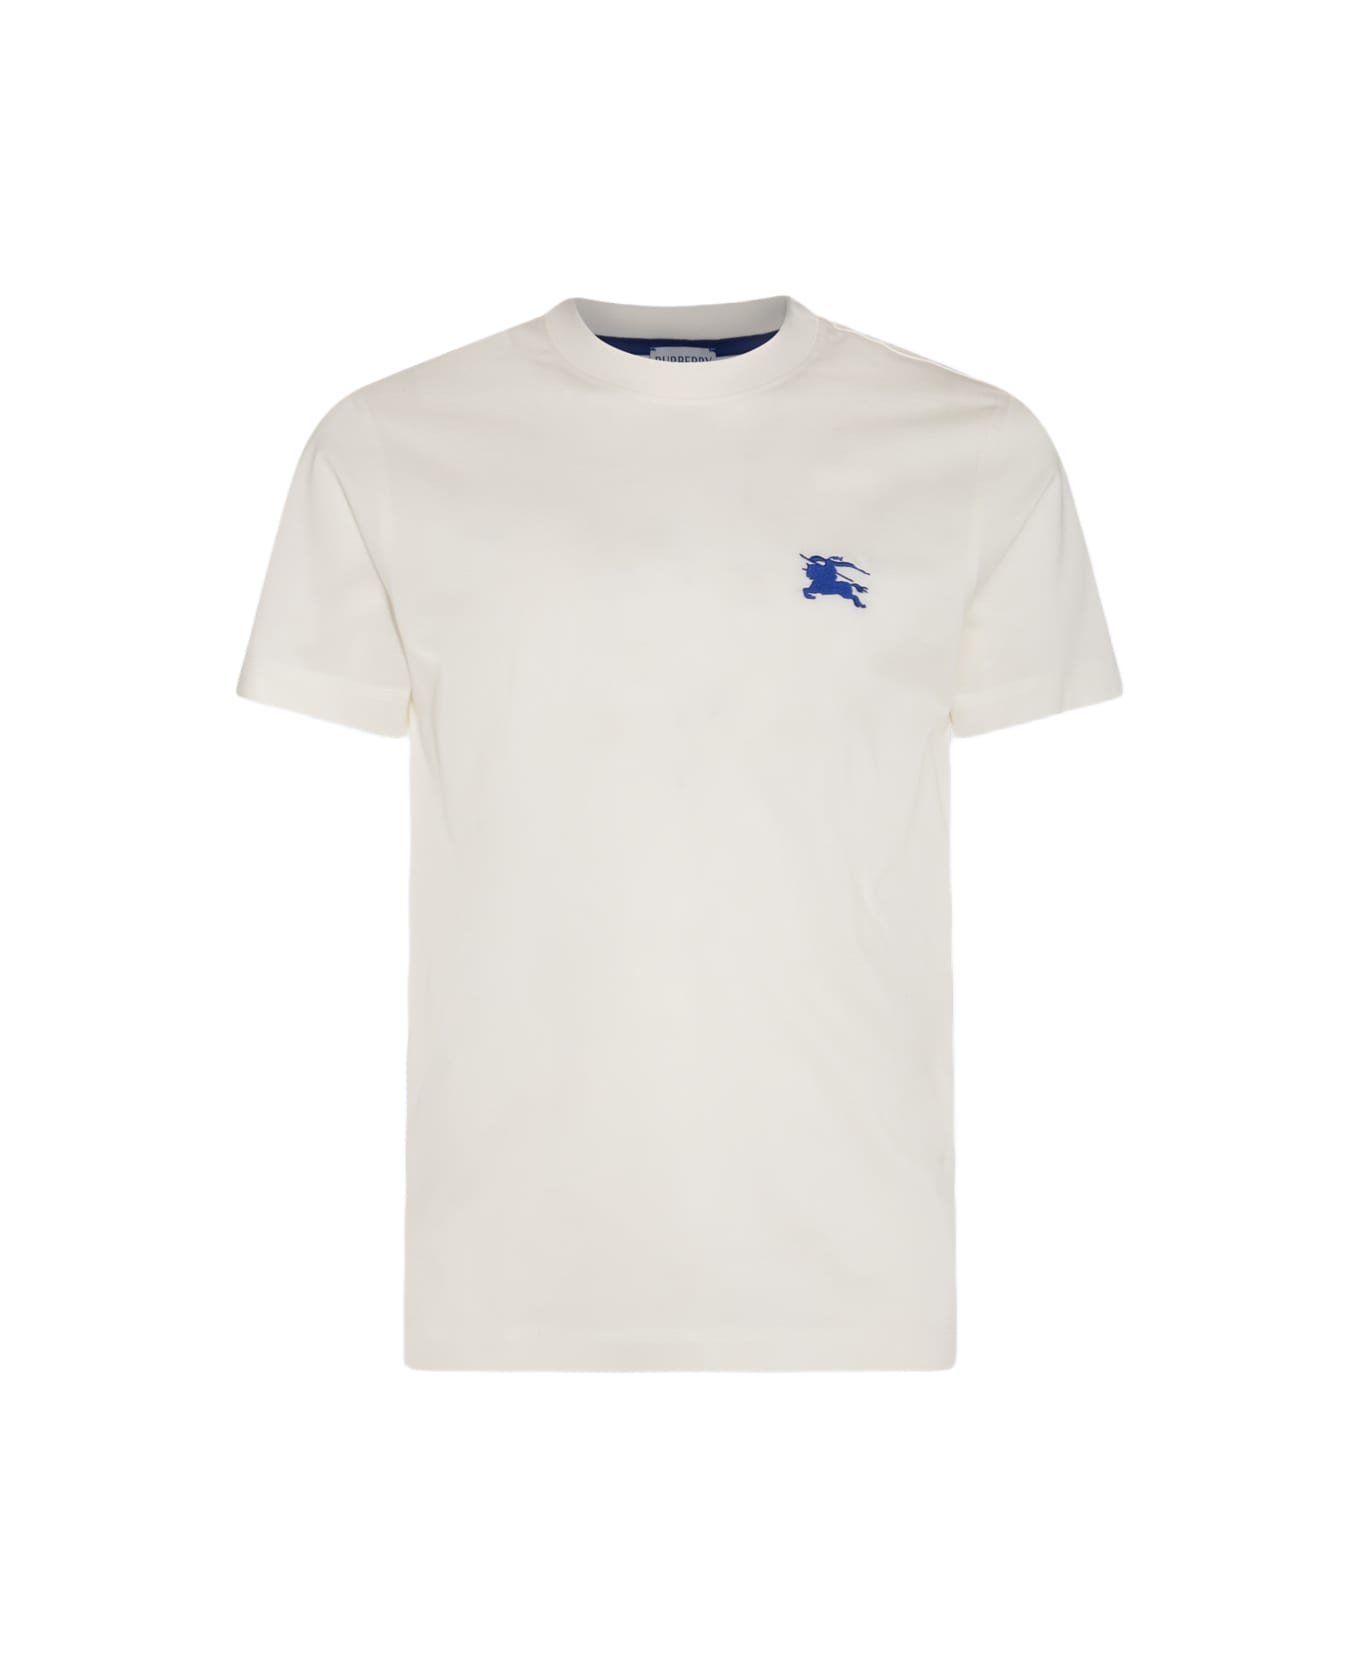 Burberry White Cotton T-shirt - Salt